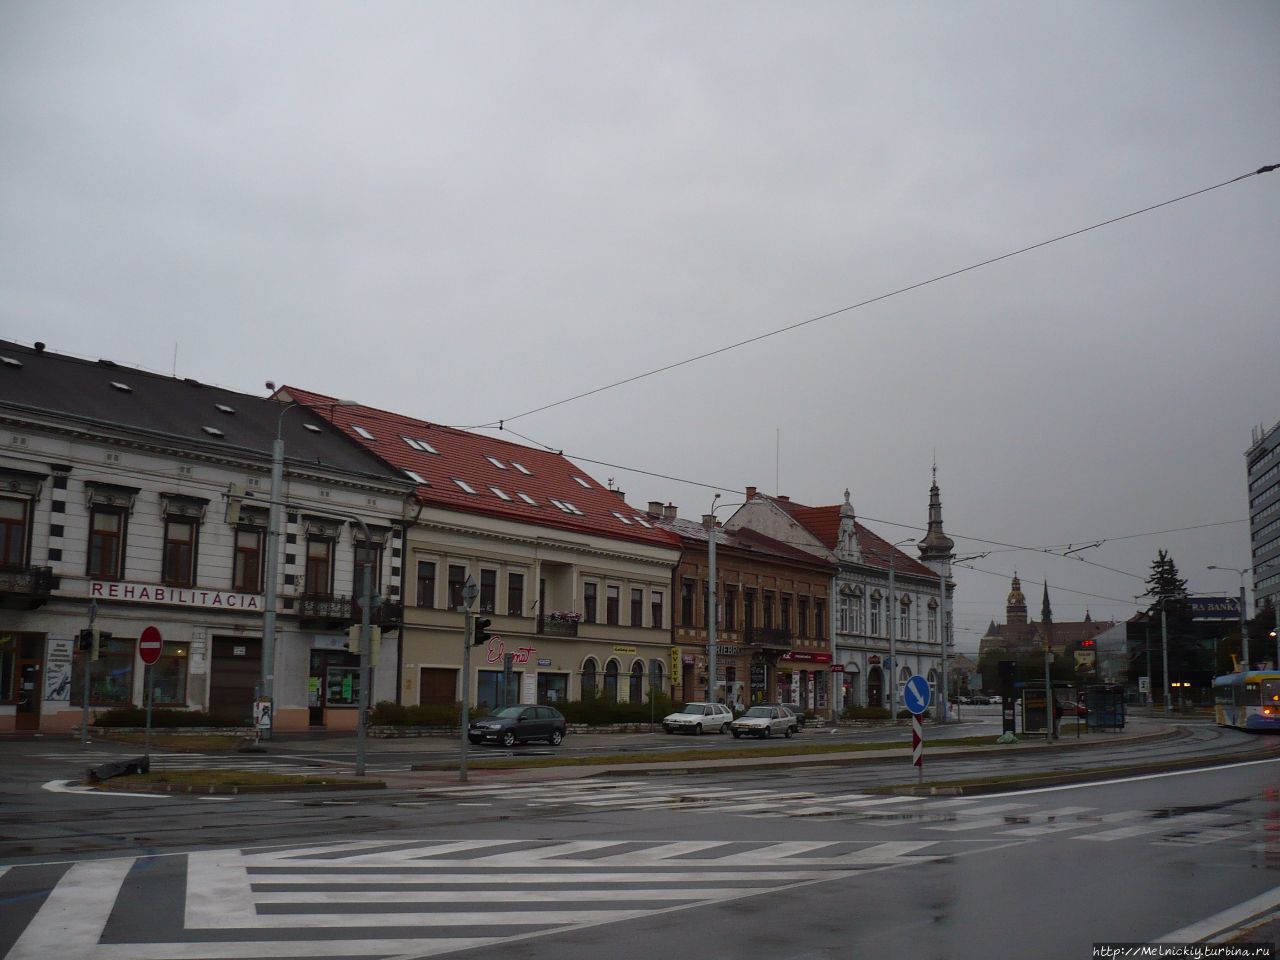 Утренняя пробежка по славному городу Кошице Кошице, Словакия